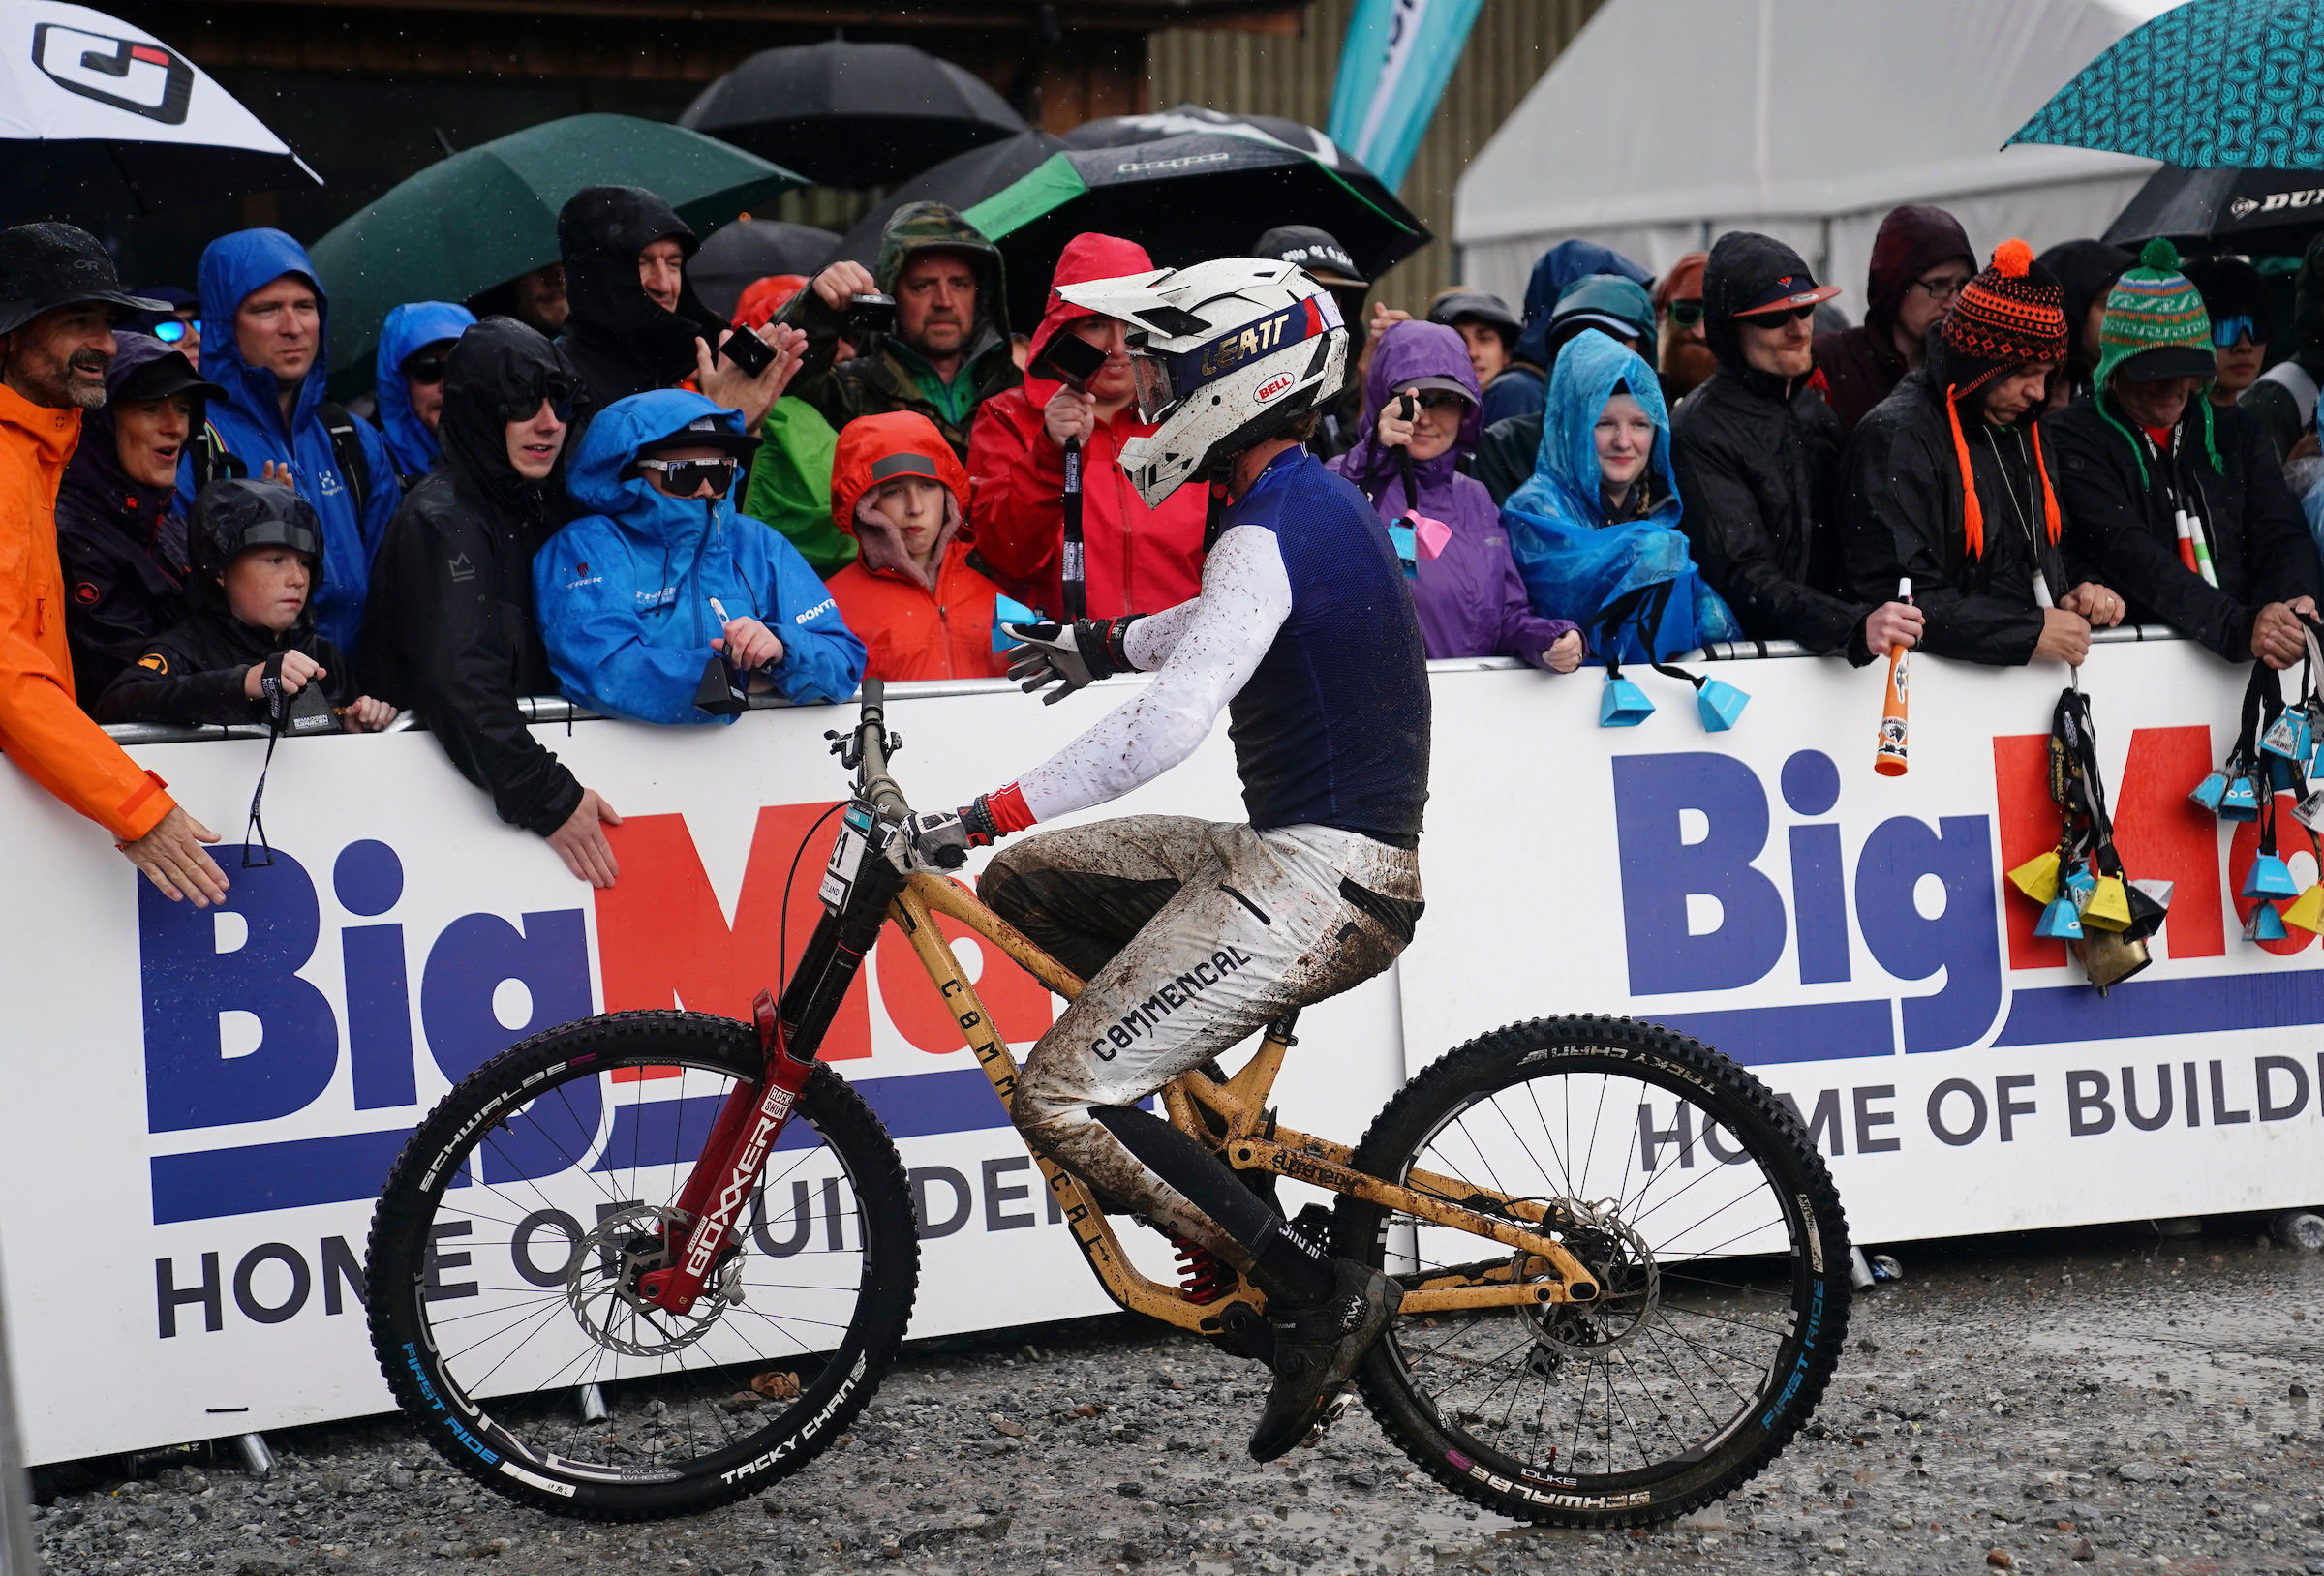 bigmat uci sponsor cicilismo mondiale uci Union Cycliste Internationale